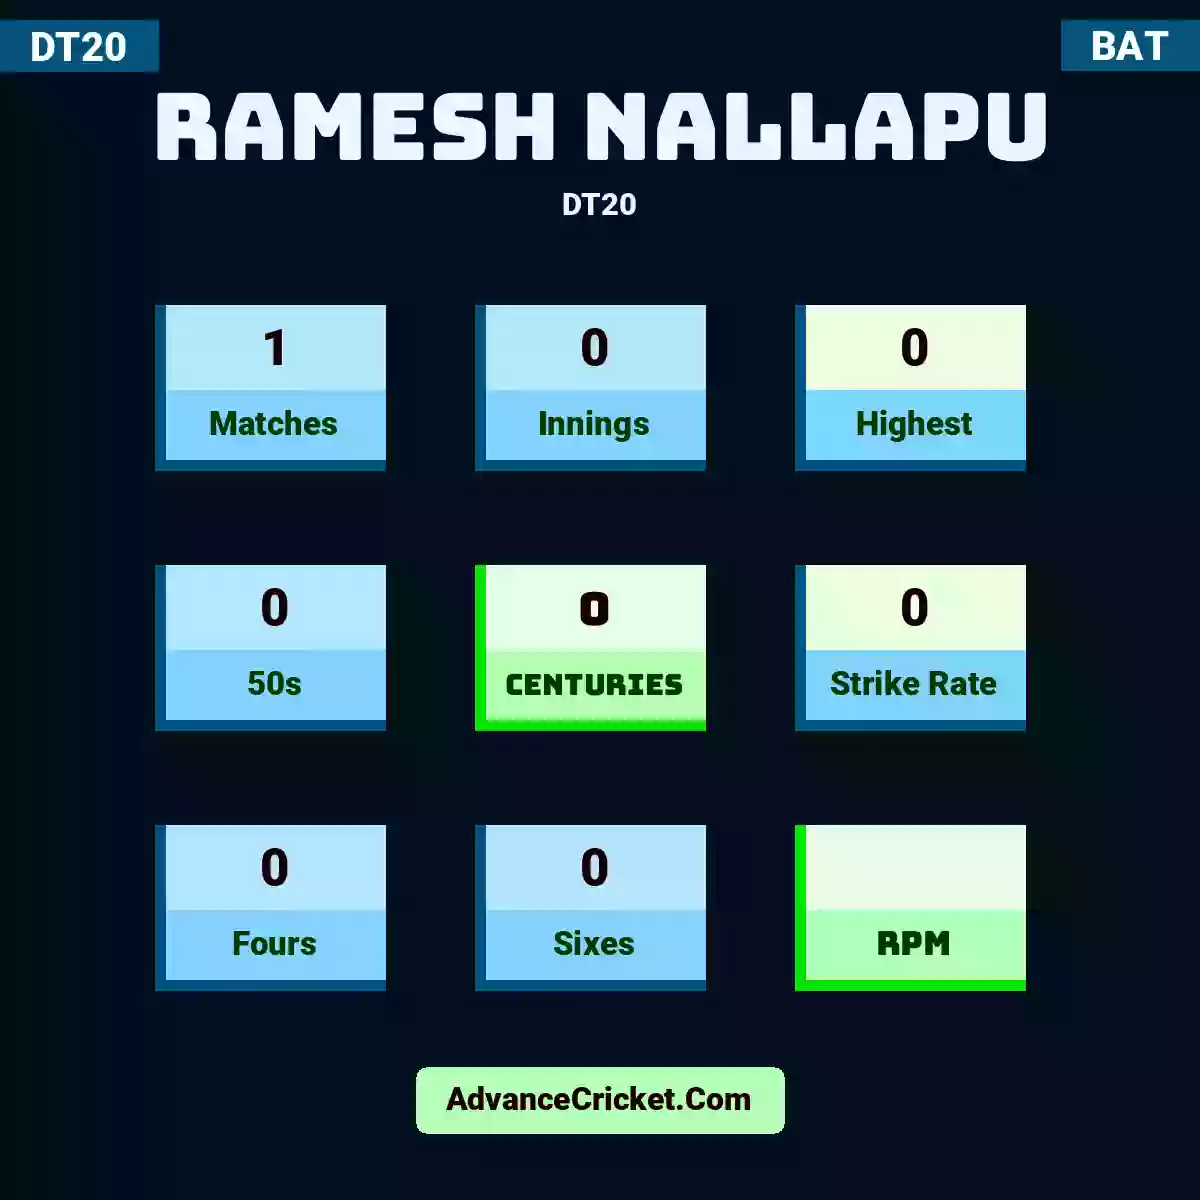 Ramesh Nallapu DT20 , Ramesh Nallapu played 1 matches, scored 0 runs as highest, 0 half-centuries, and 0 centuries, with a strike rate of 0. r.nallapu hit 0 fours and 0 sixes.